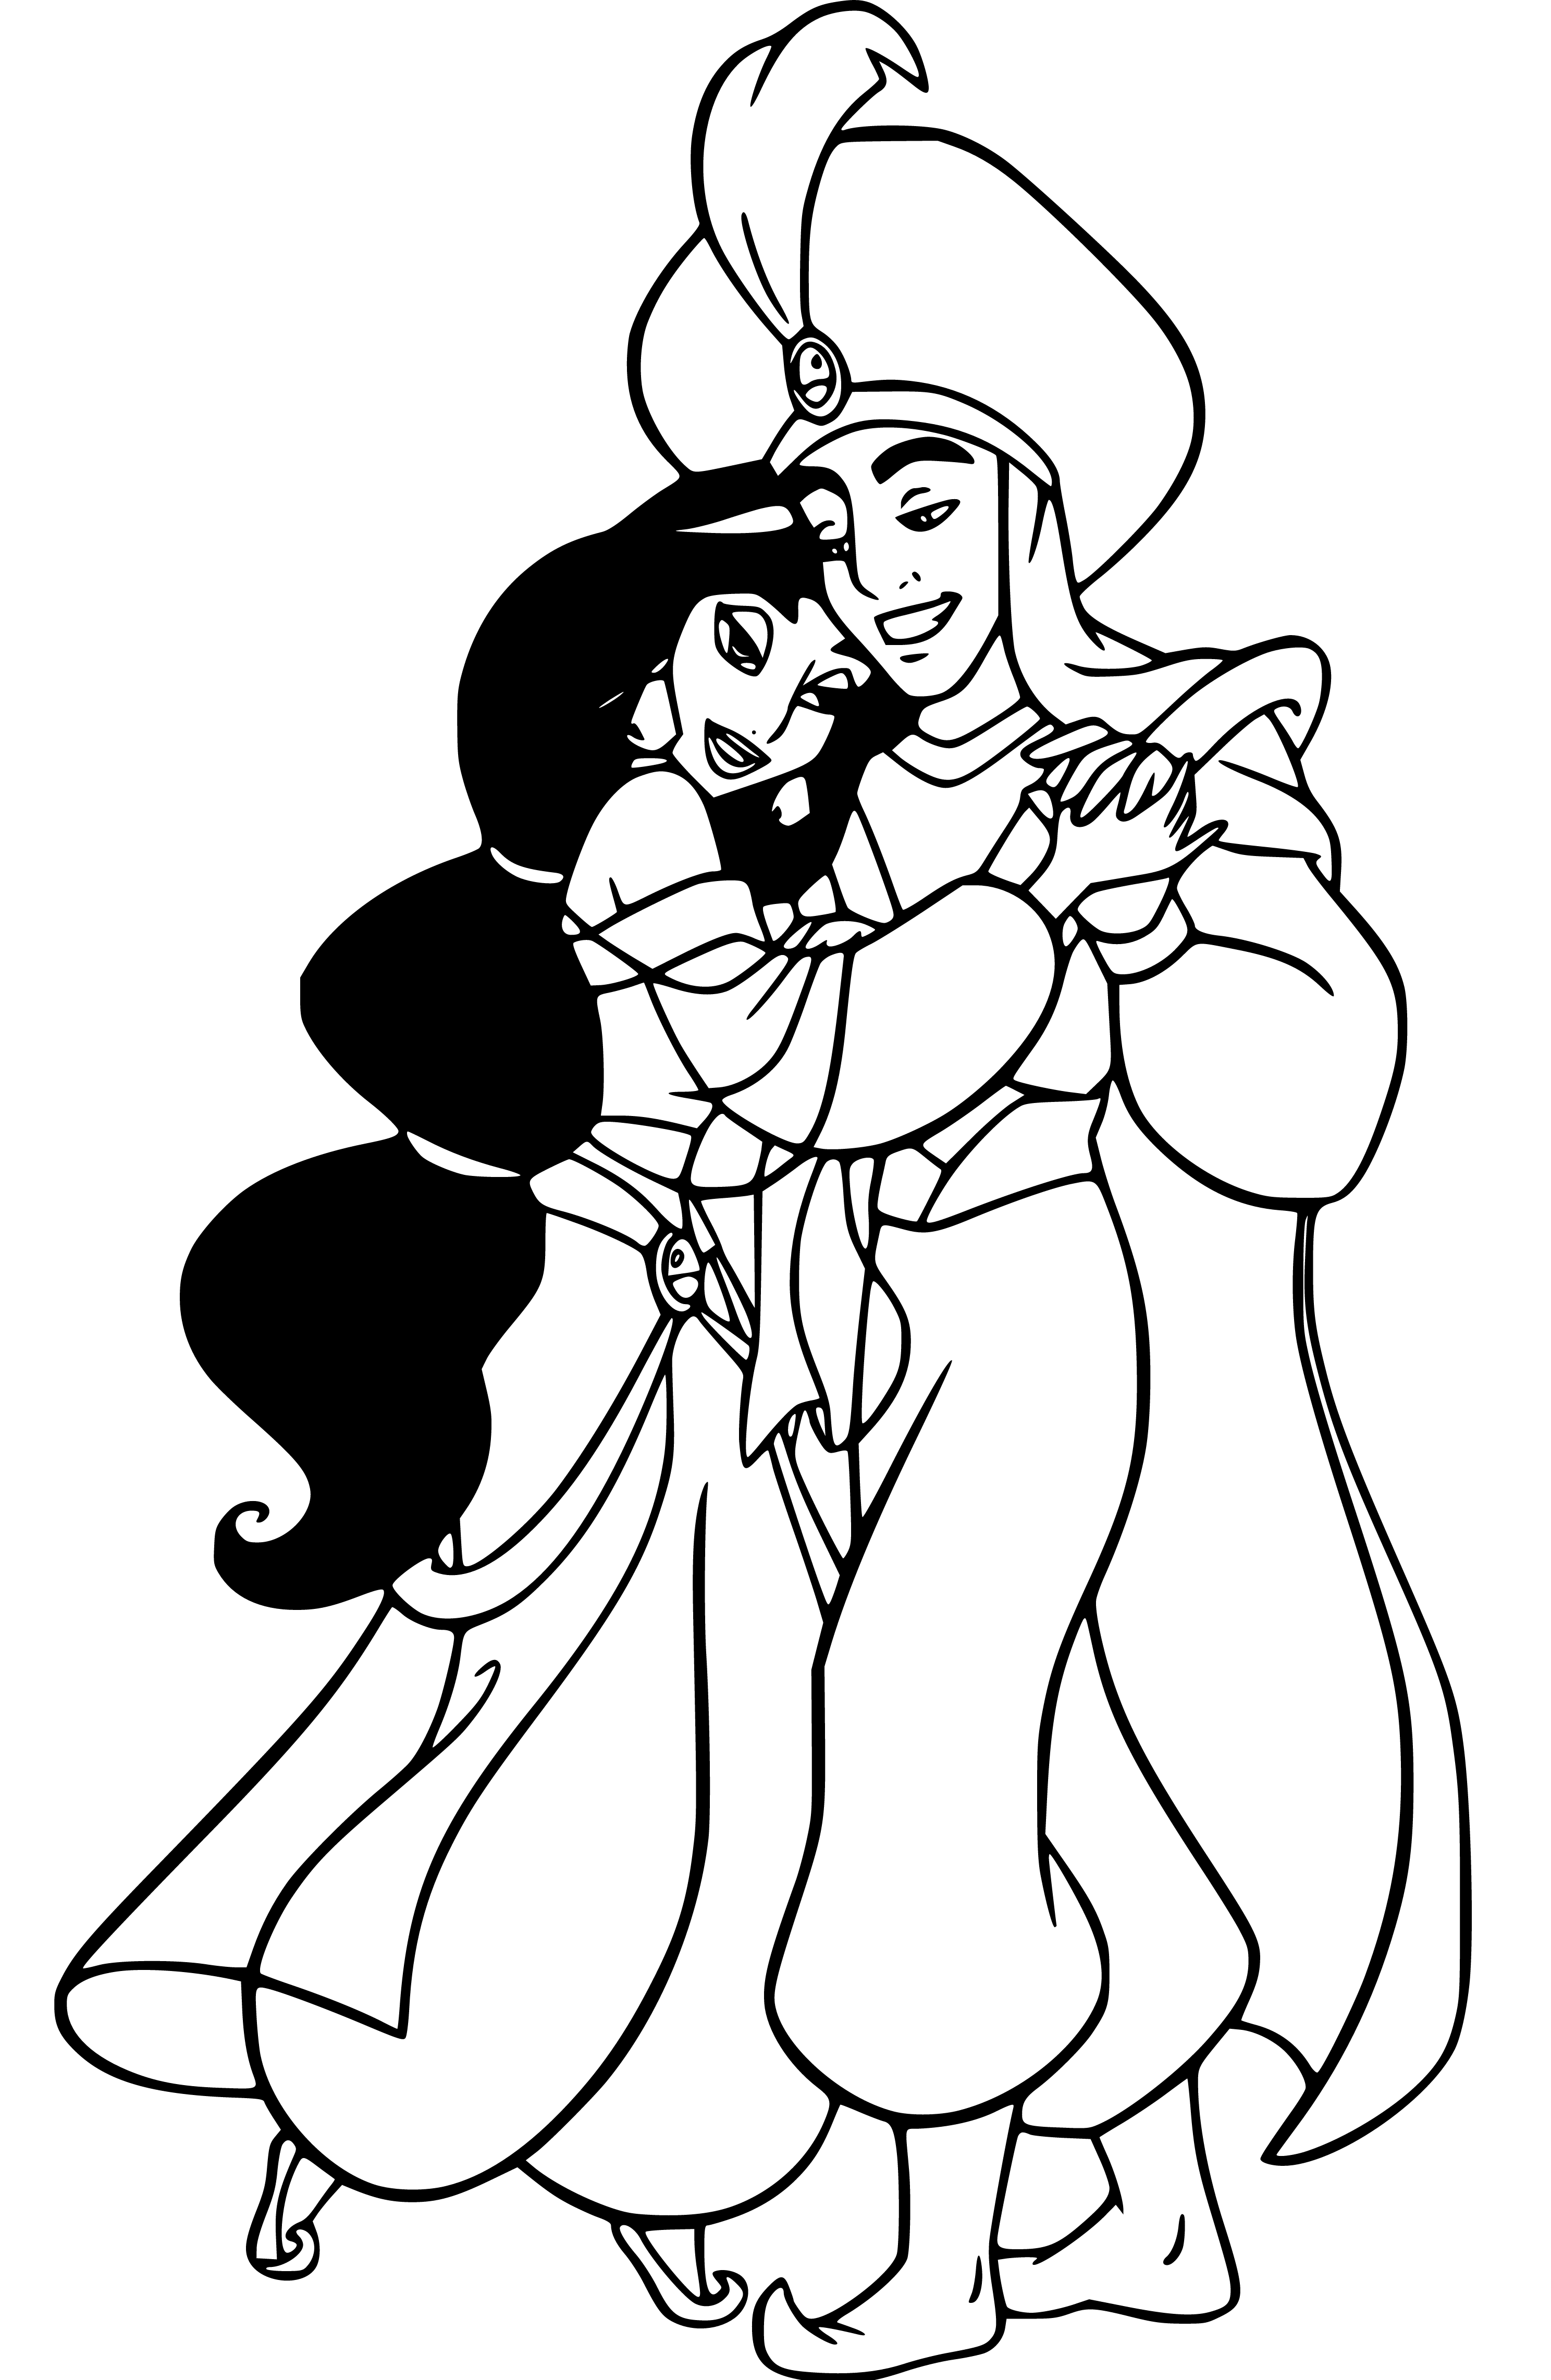 Aladdin and Jasmine Simple Coloring Page for Kids - SheetalColor.com